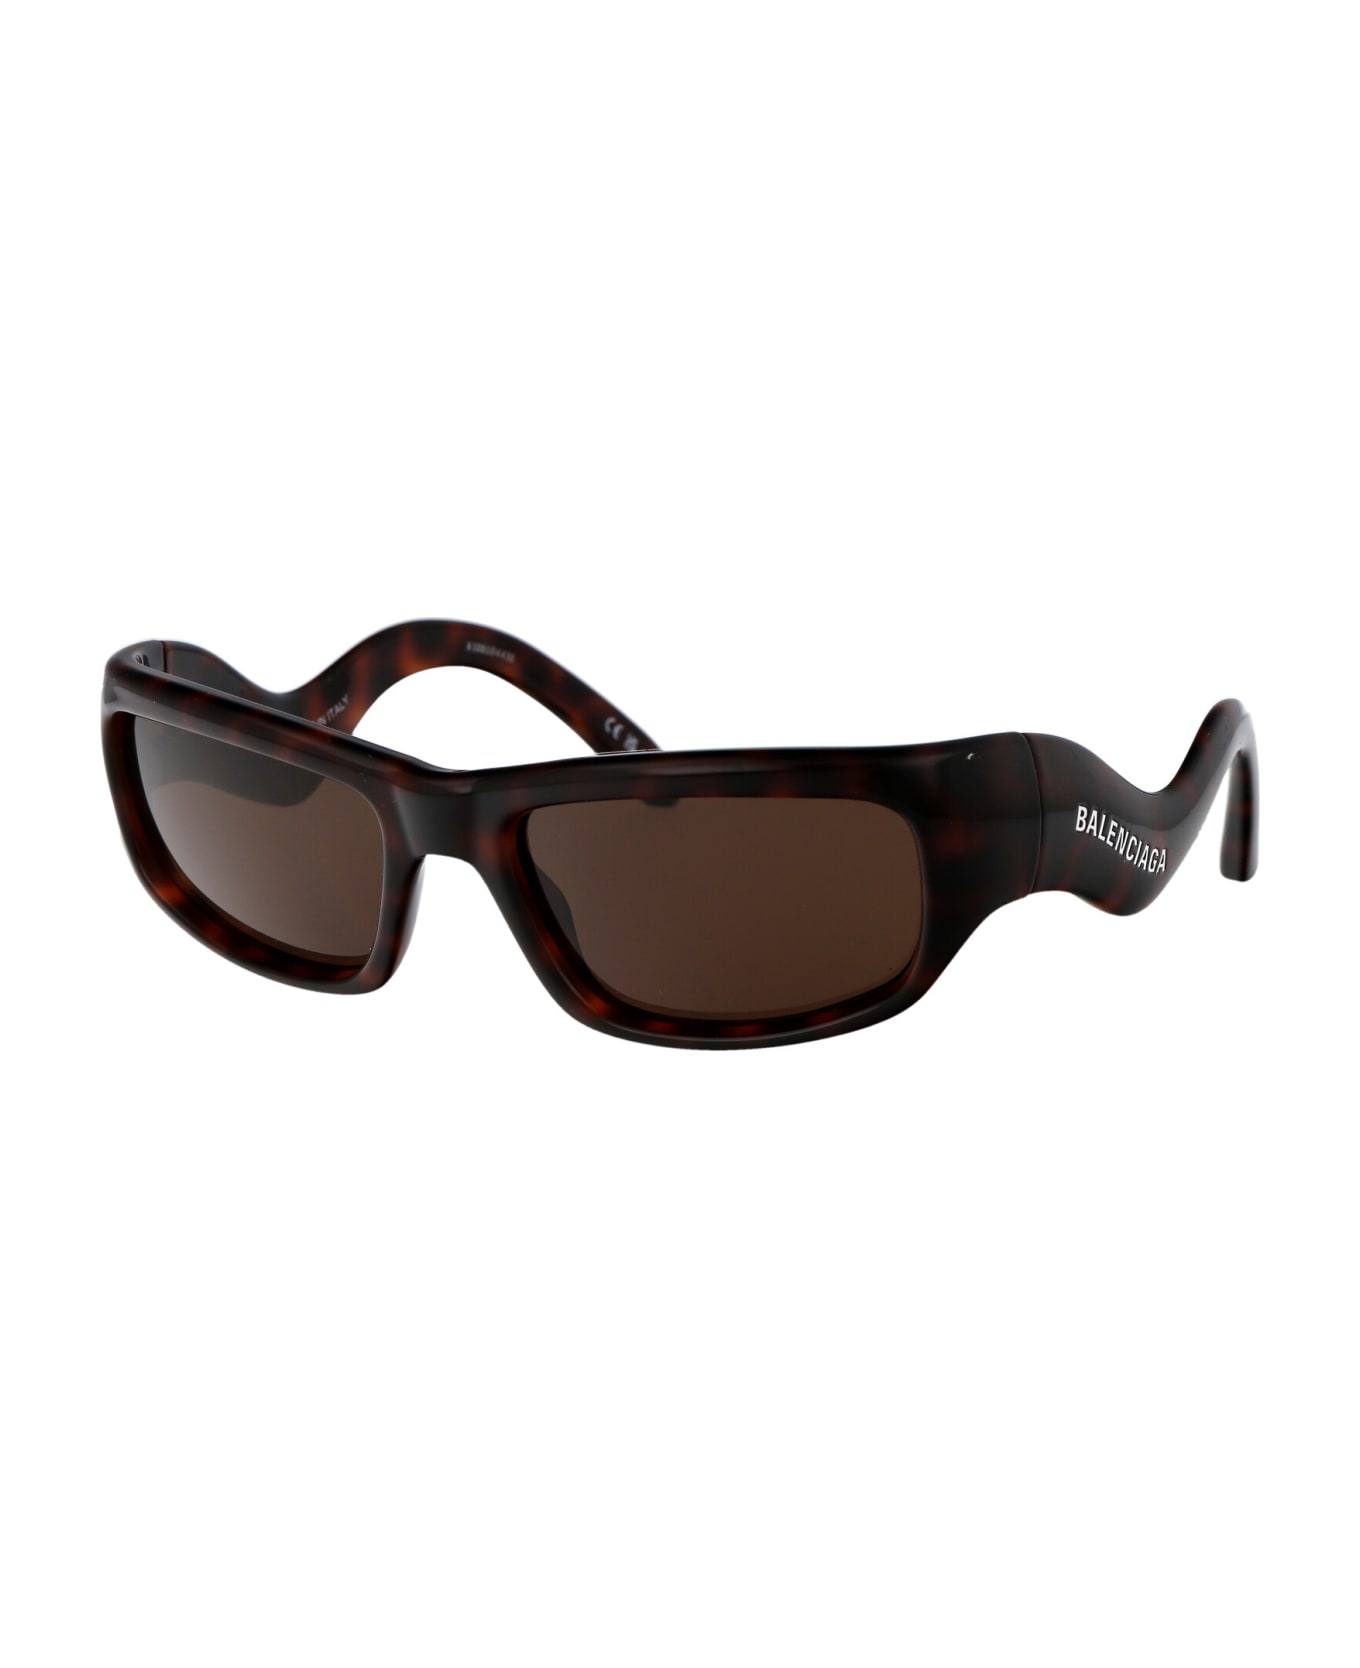 Balenciaga Eyewear Bb0320s Sunglasses - 002 HAVANA HAVANA BROWN